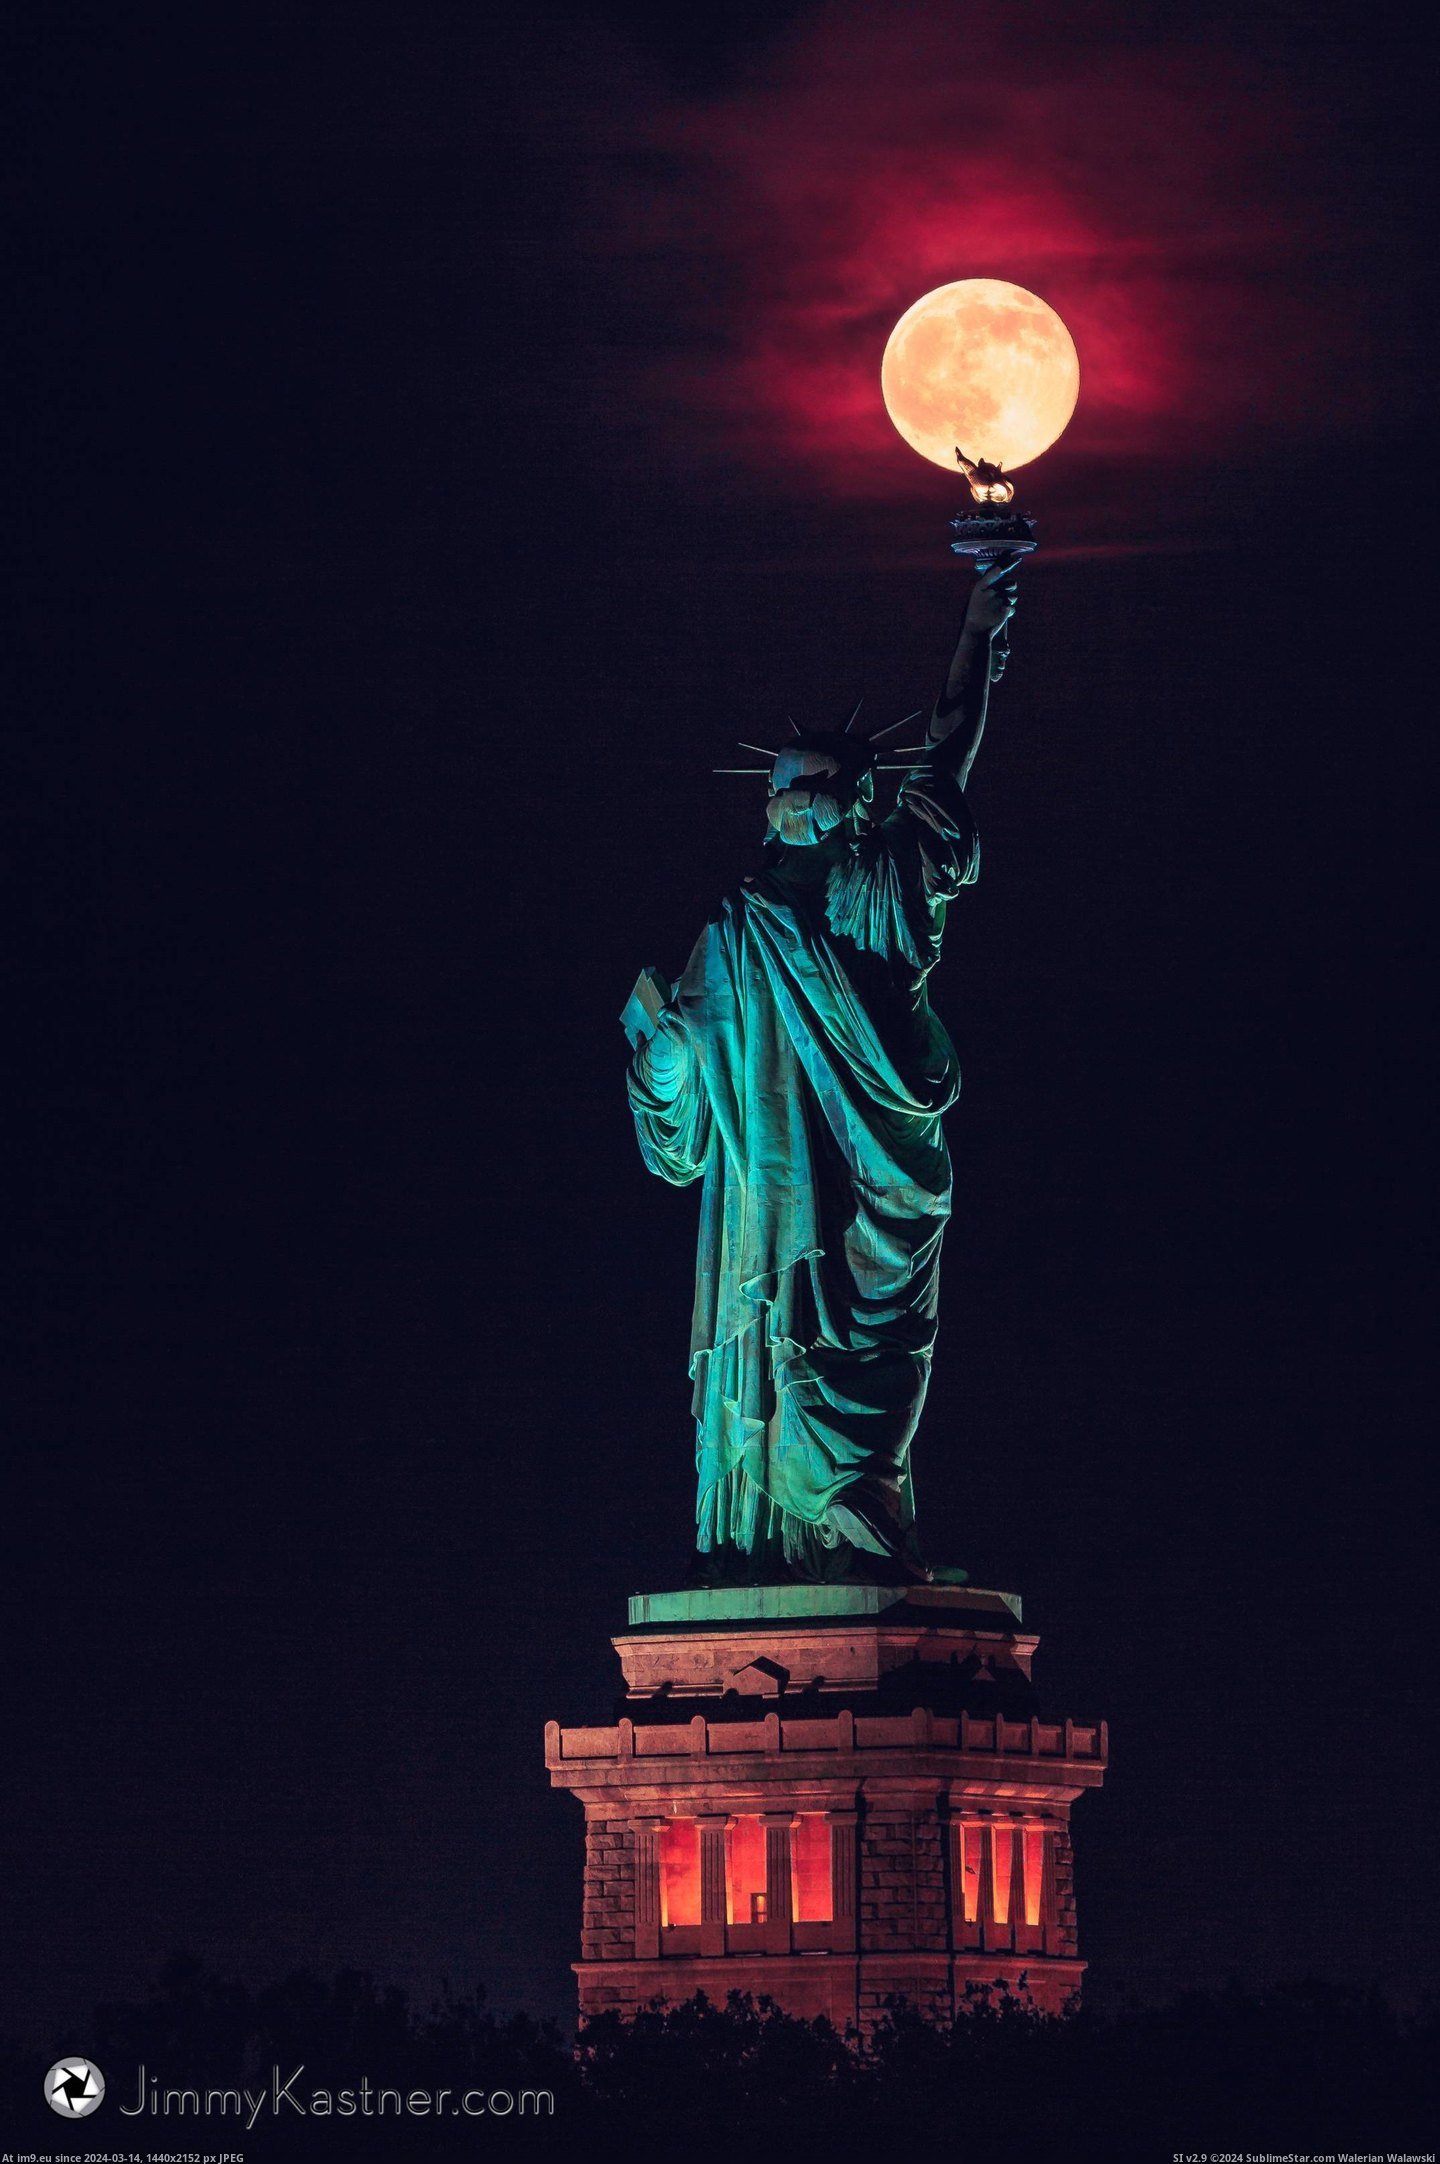 #Night #Full #Summer #Solstice #Balancing #Liberty #Moon #Rare #Statue [Pics] Last night's rare summer solstice full moon balancing on the Statue of Liberty's torch Pic. (Bild von album My r/PICS favs))